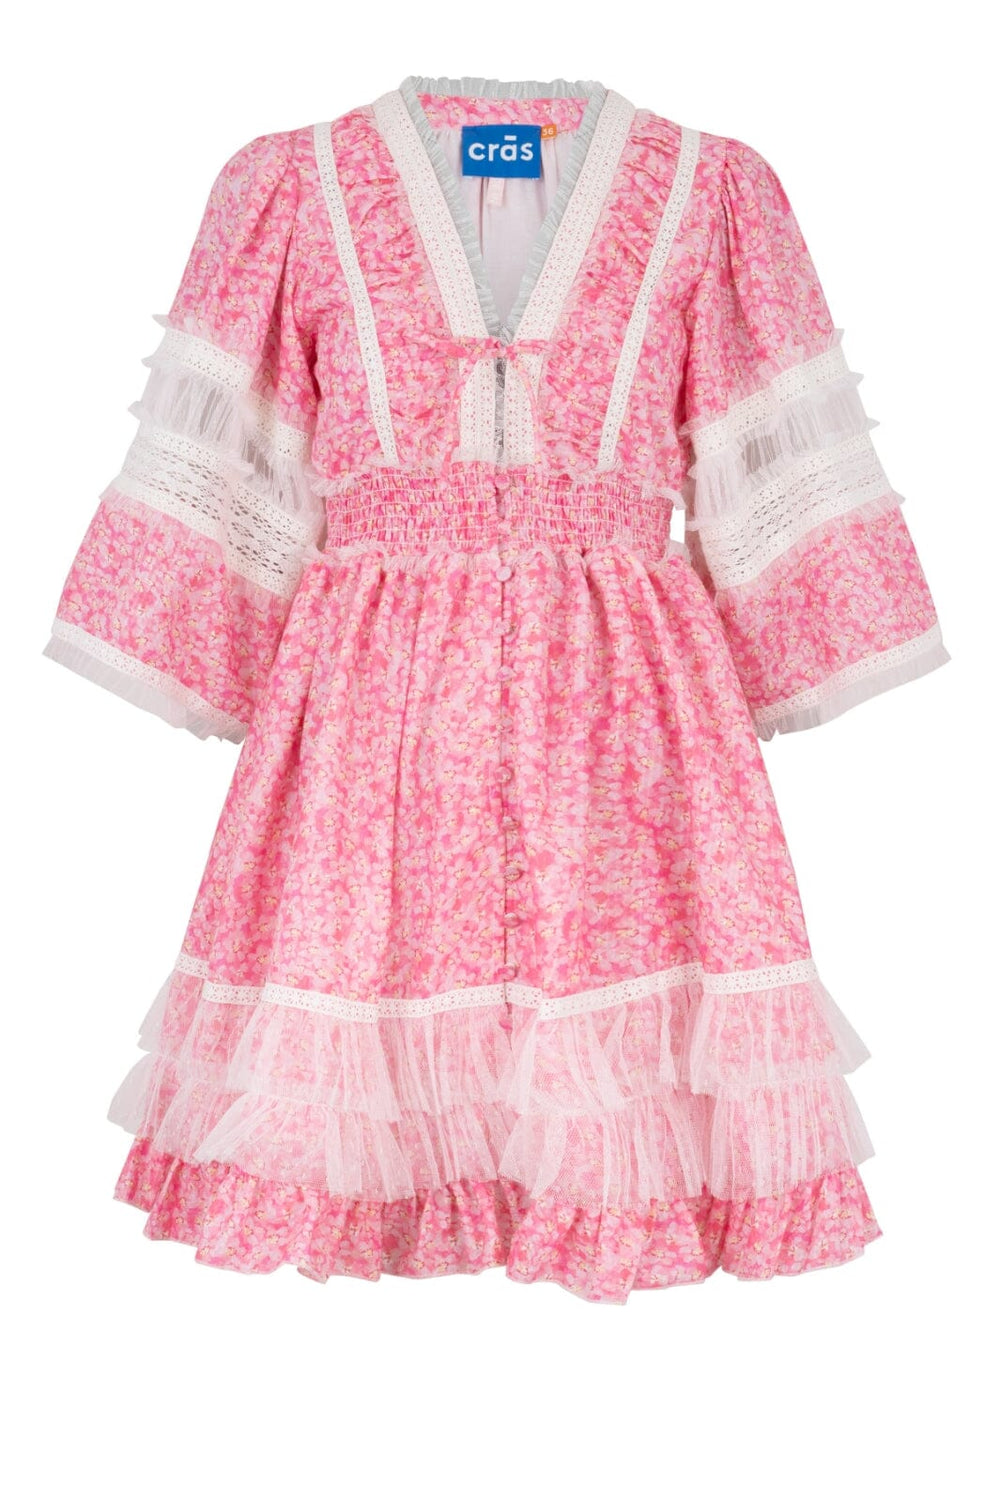 Cras - Edencras Dress - 8010 Seer Pink Kjoler 